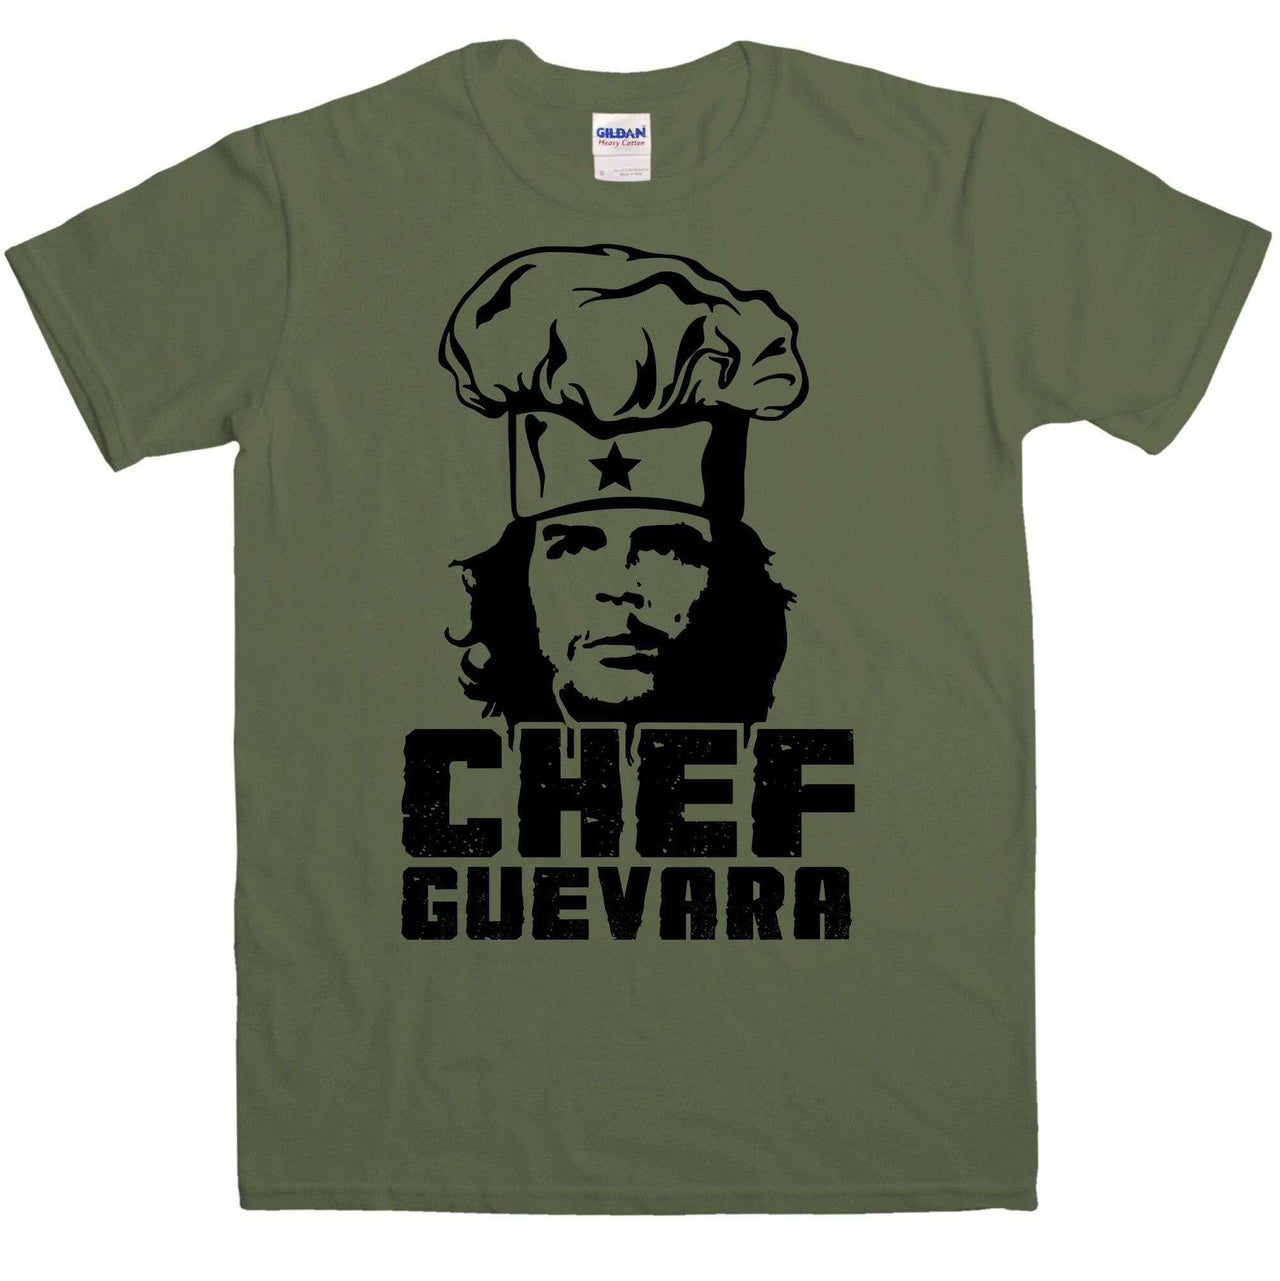 Chef Guevara Graphic T-Shirt For Men 8Ball